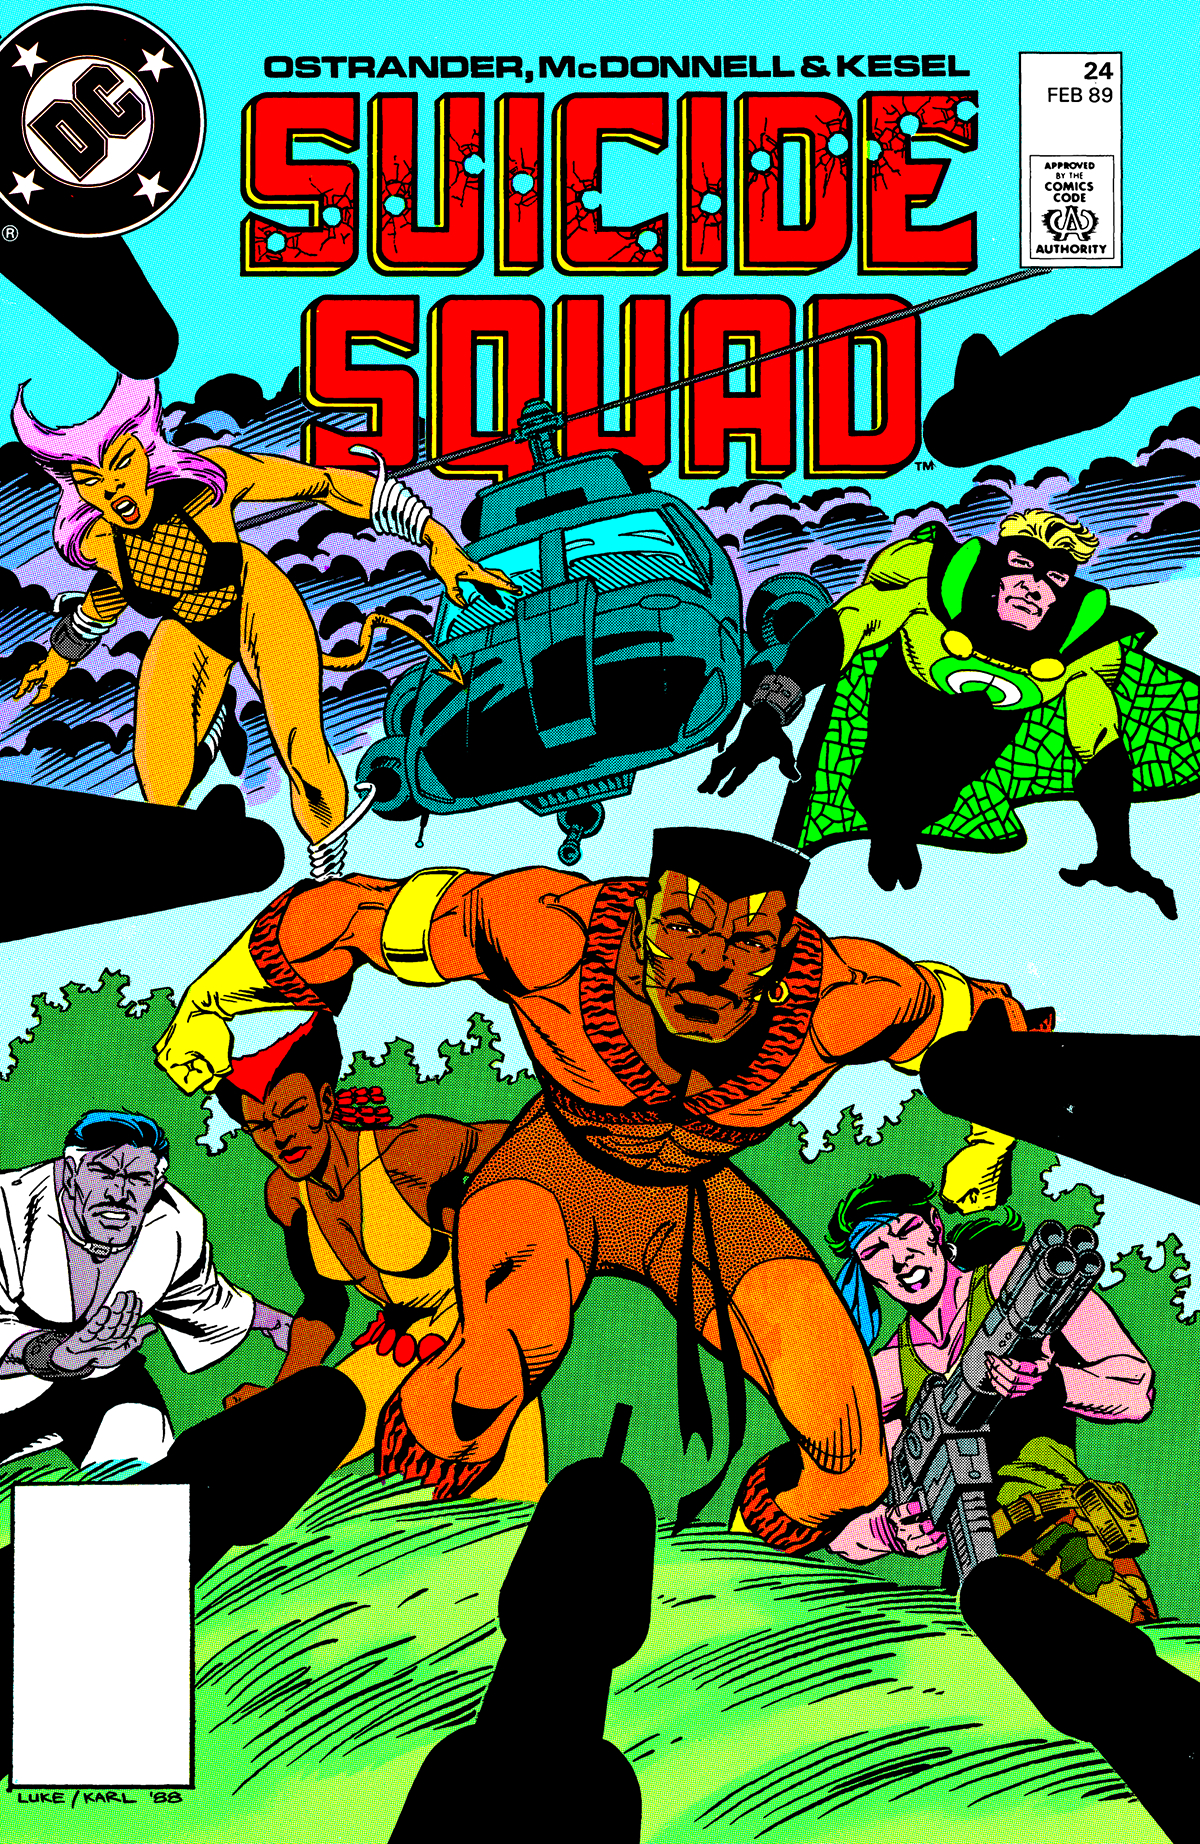 Details about   Suicide Squad #6 October 1987 DC Comics Ostrander McDonnell Lewis DEADSHOT 